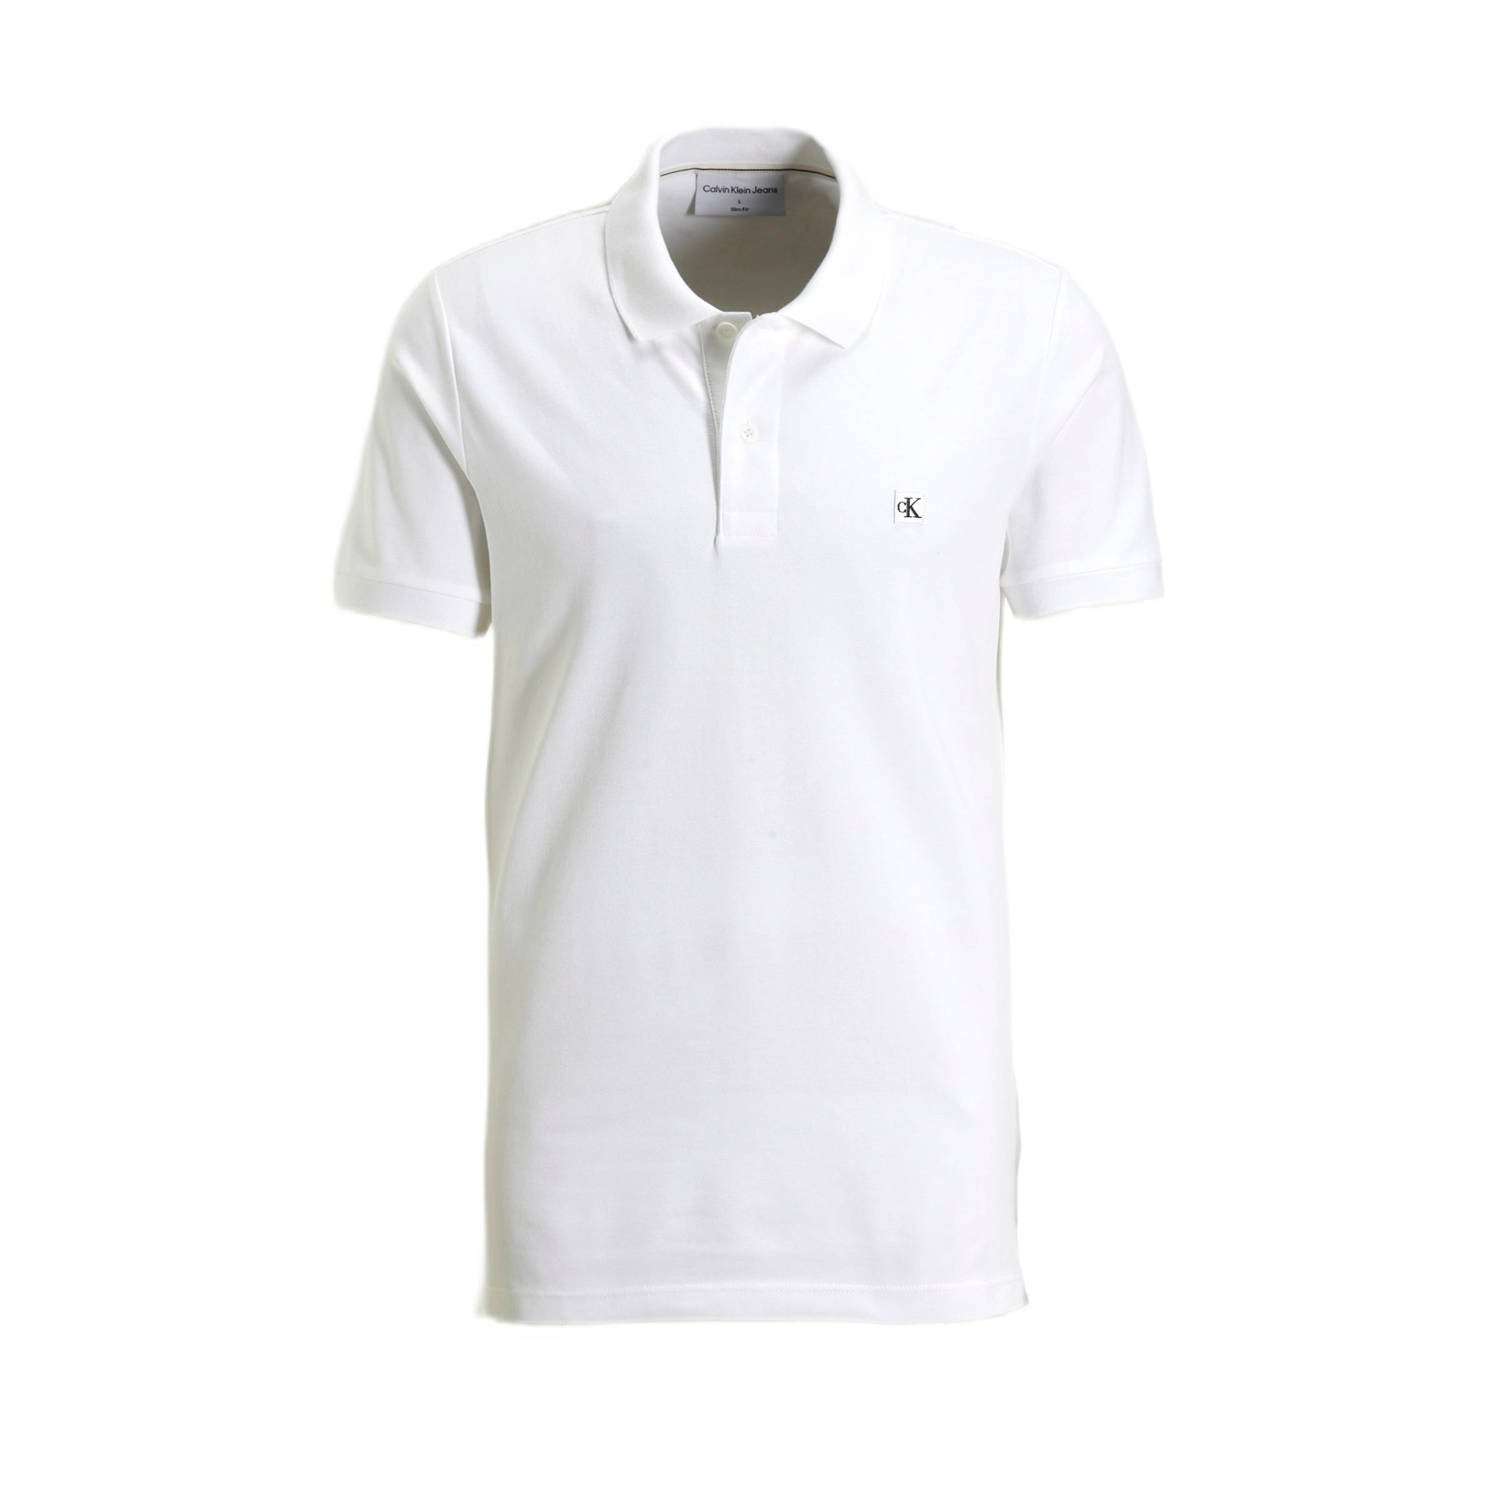 CALVIN KLEIN Heren Polo's & T-shirts Ck Embro Badge Slim Polo Wit